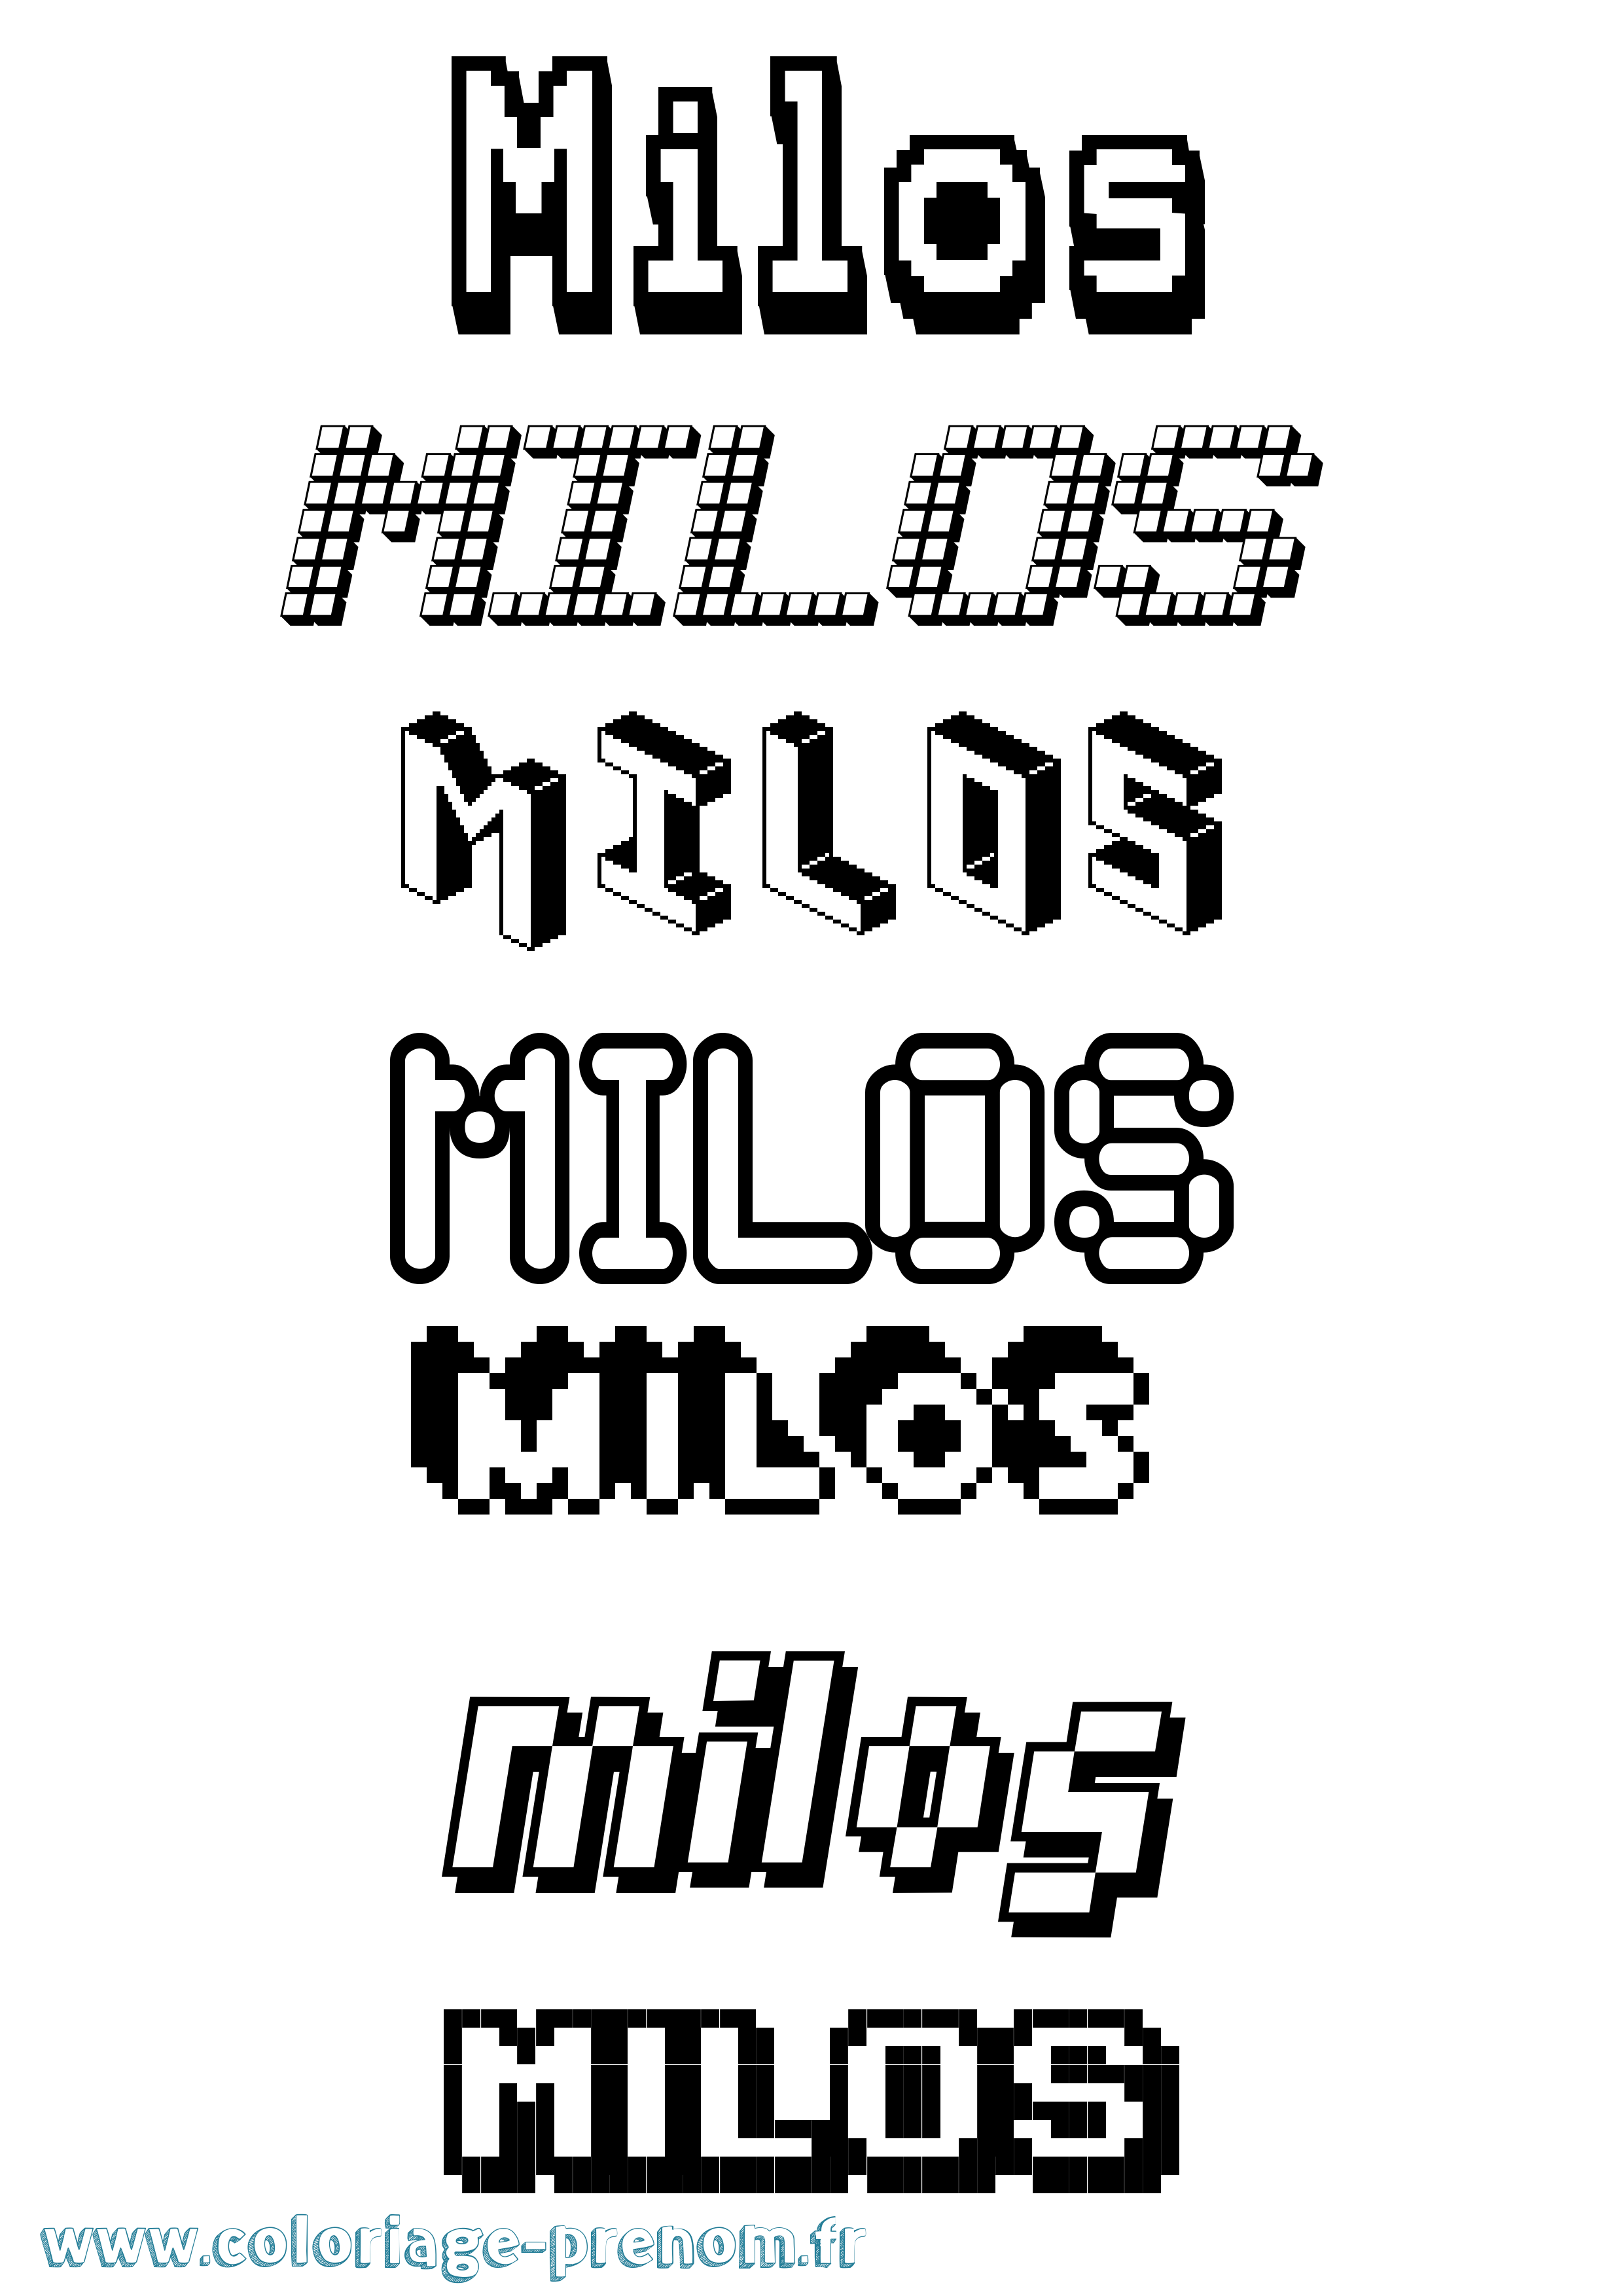 Coloriage prénom Milos Pixel